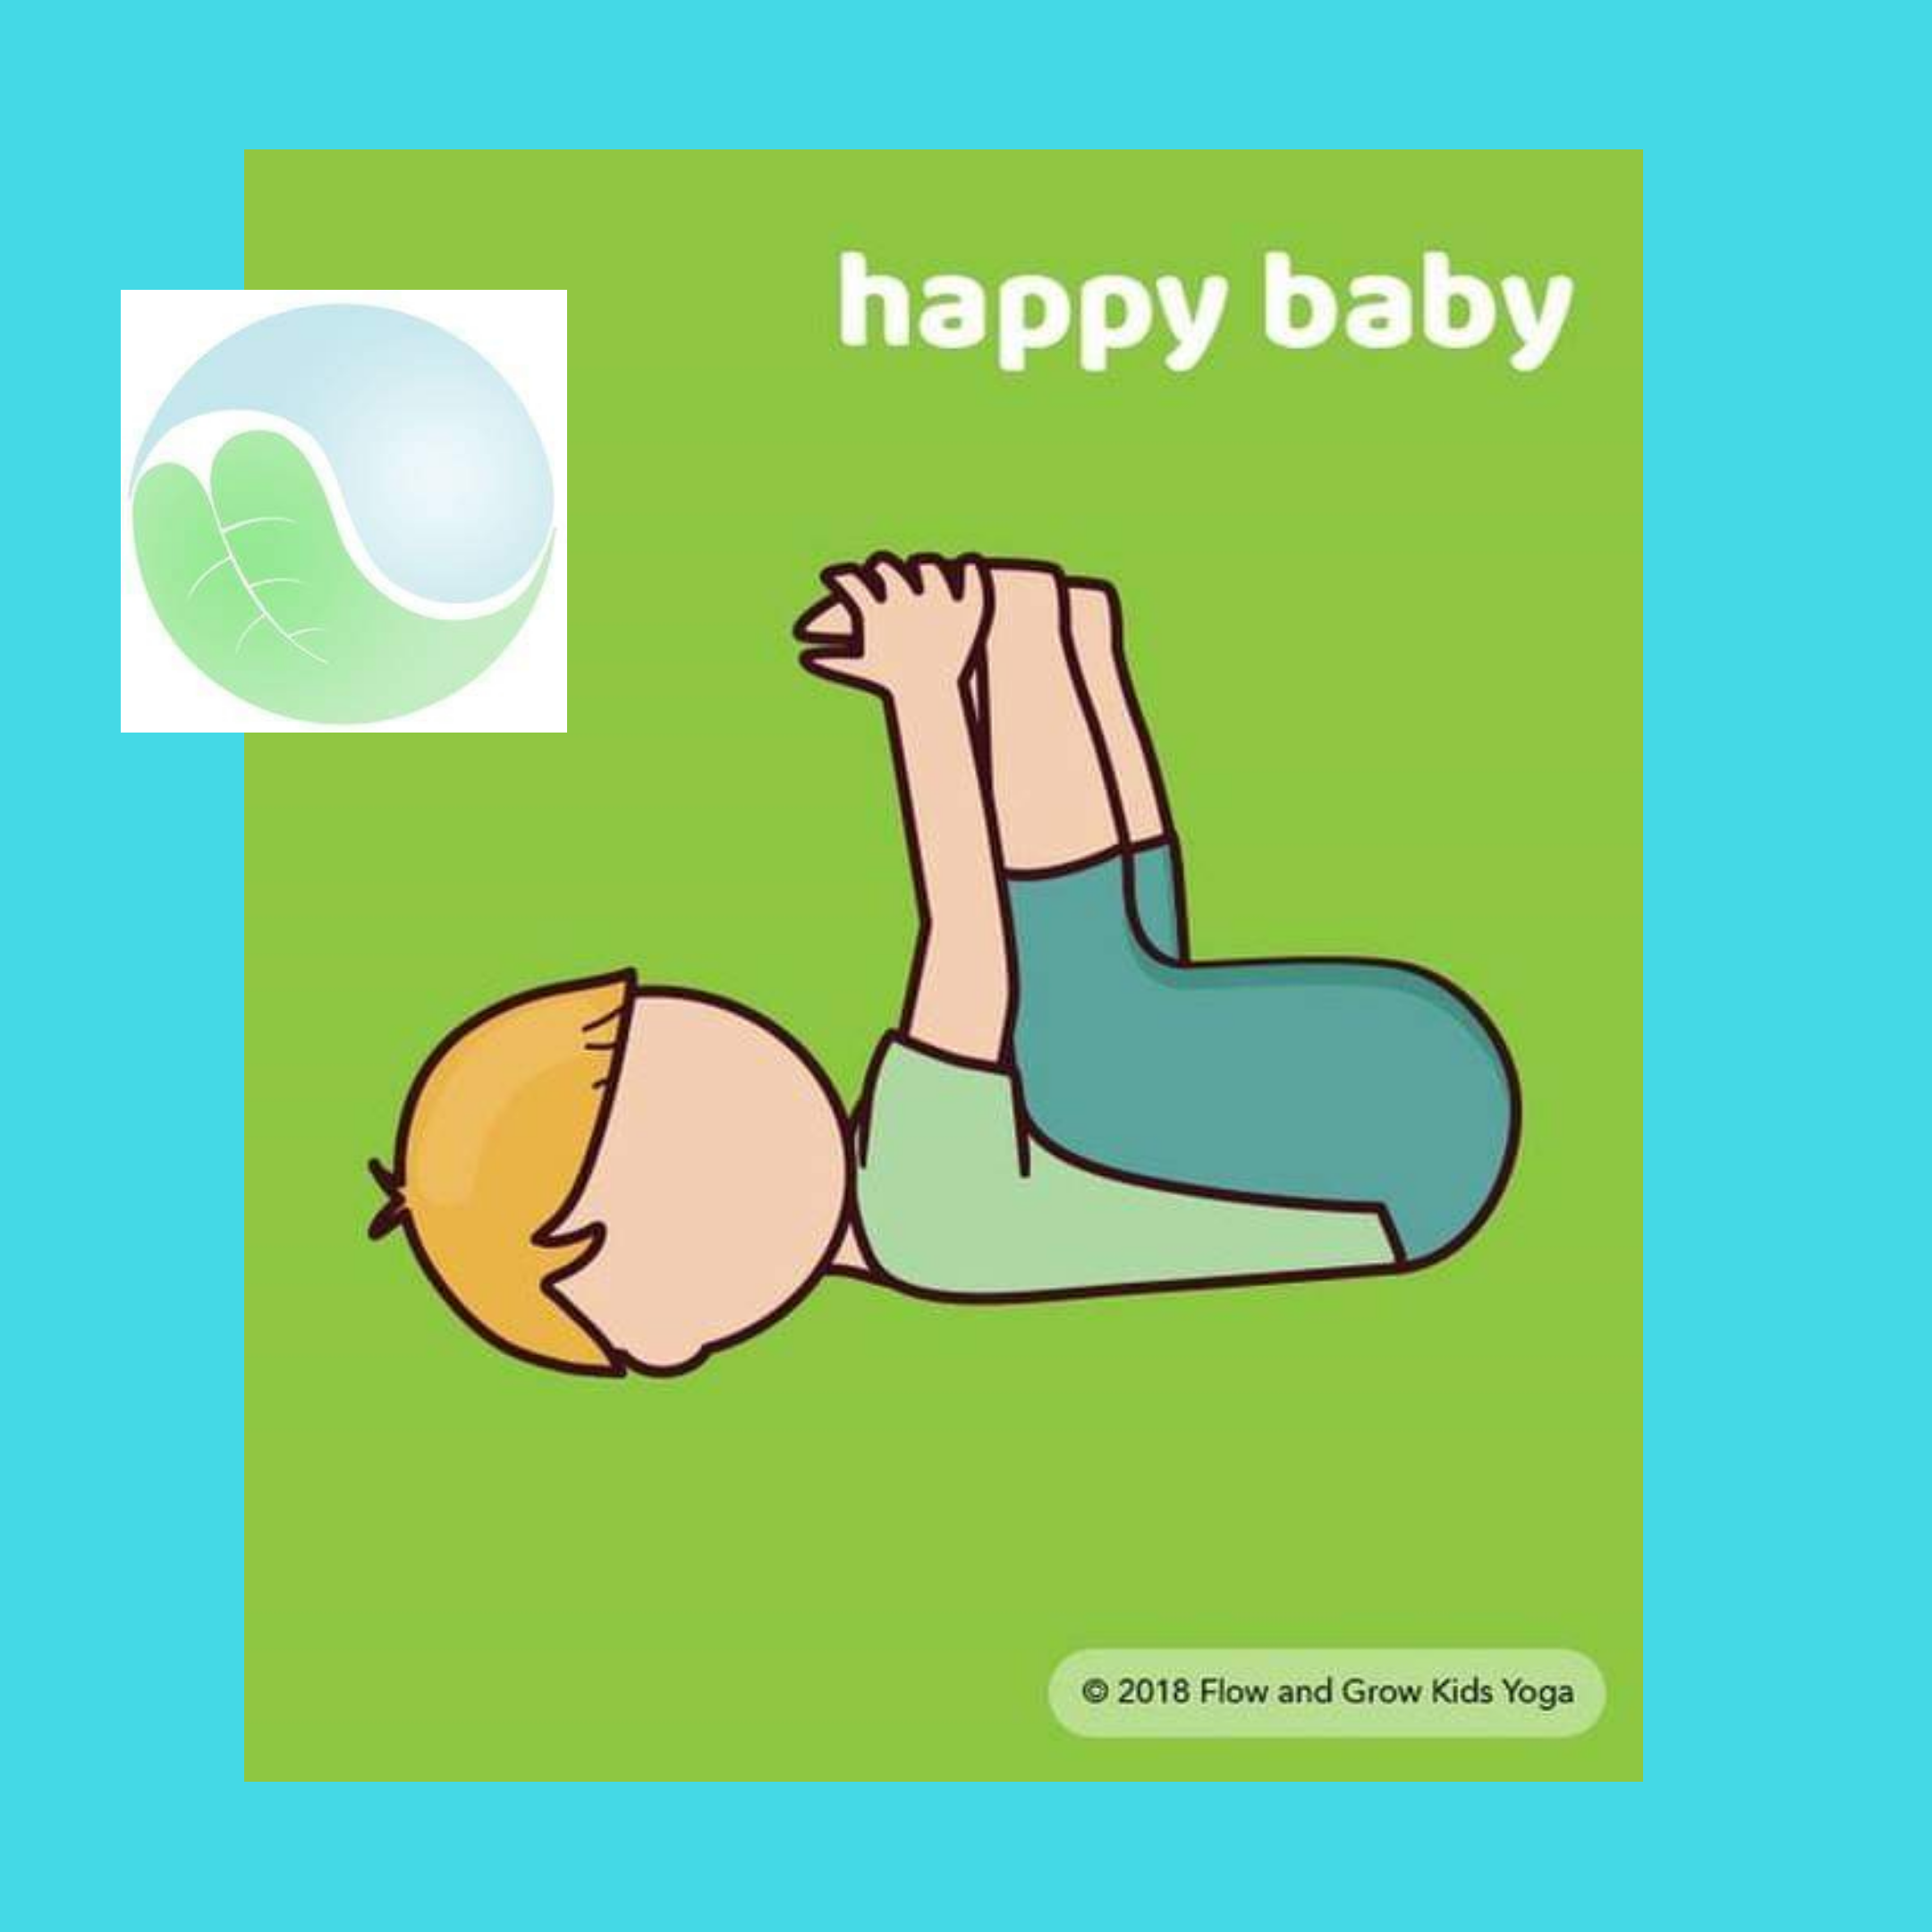 Happy Baby Pose: Ananda Balasana Benefits and Positions